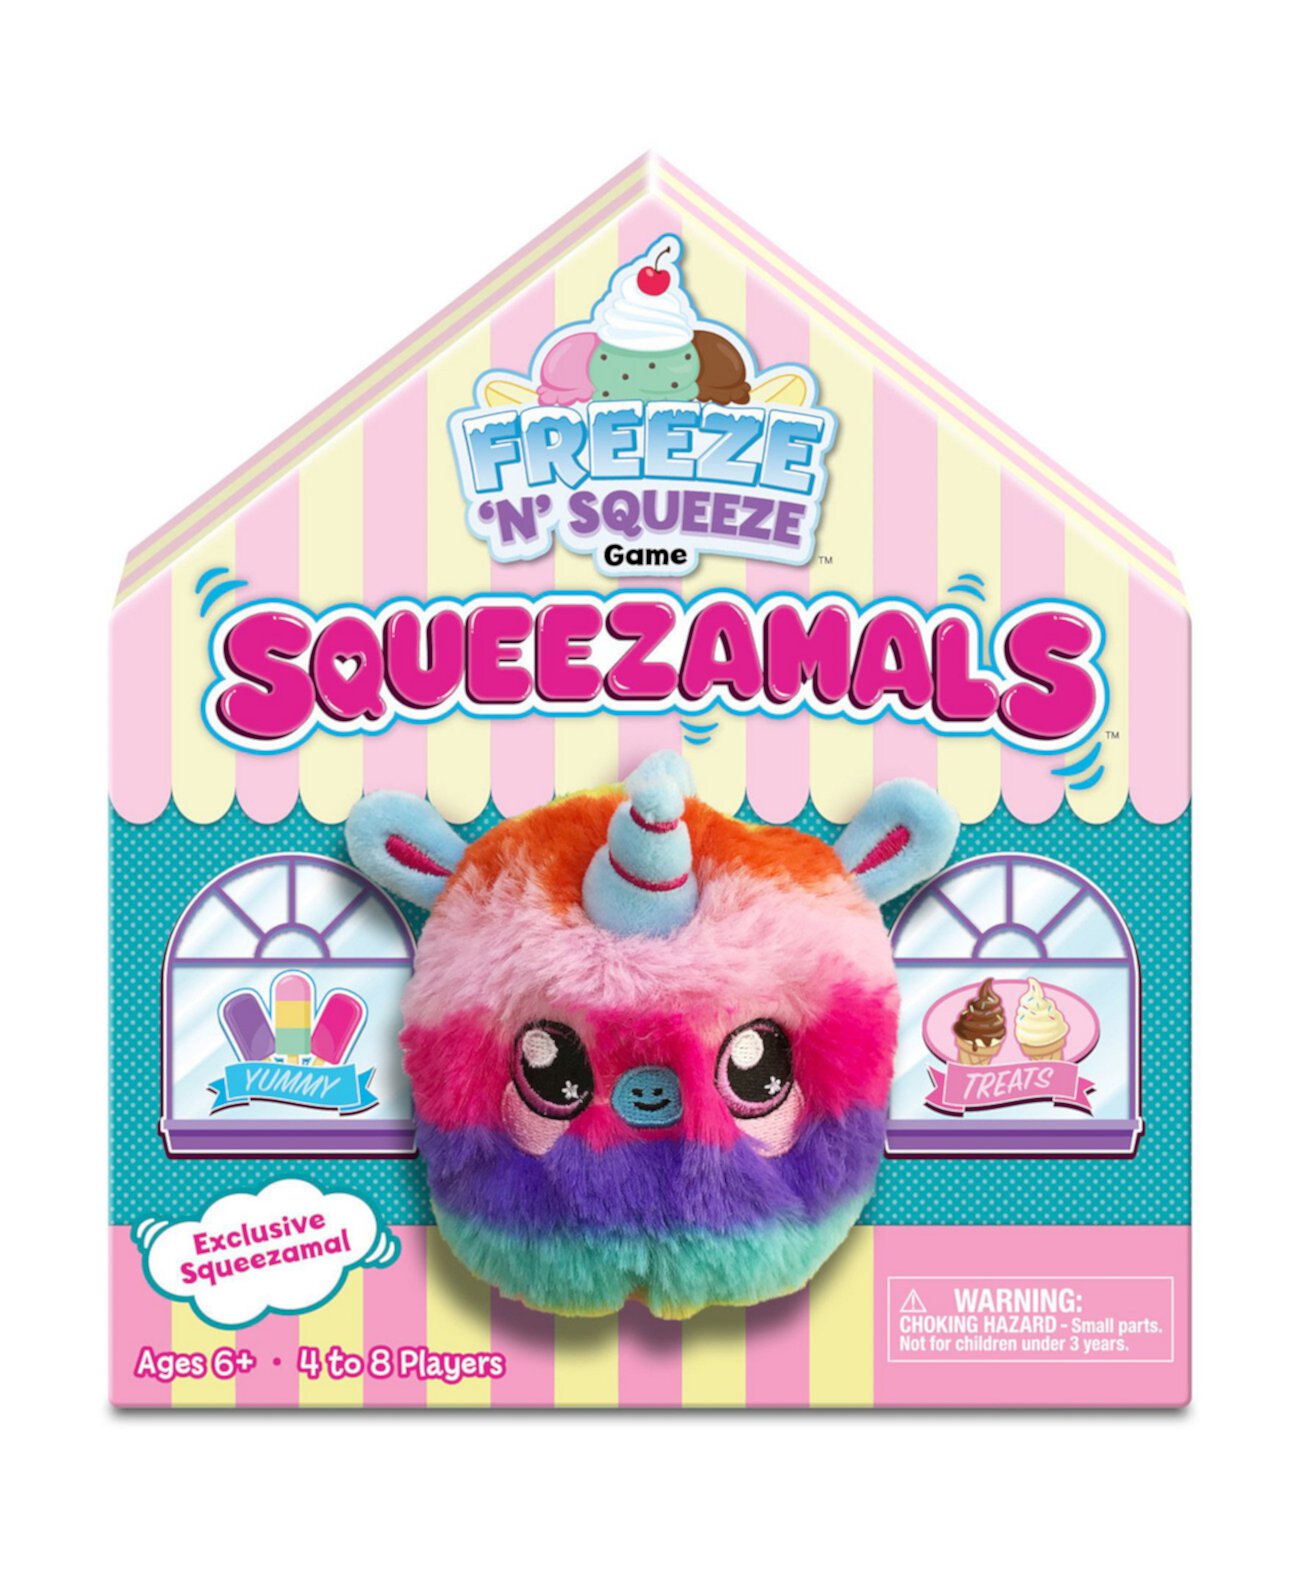 Squeezamals Freeze 'N' Squeeze Детская игра First & Main